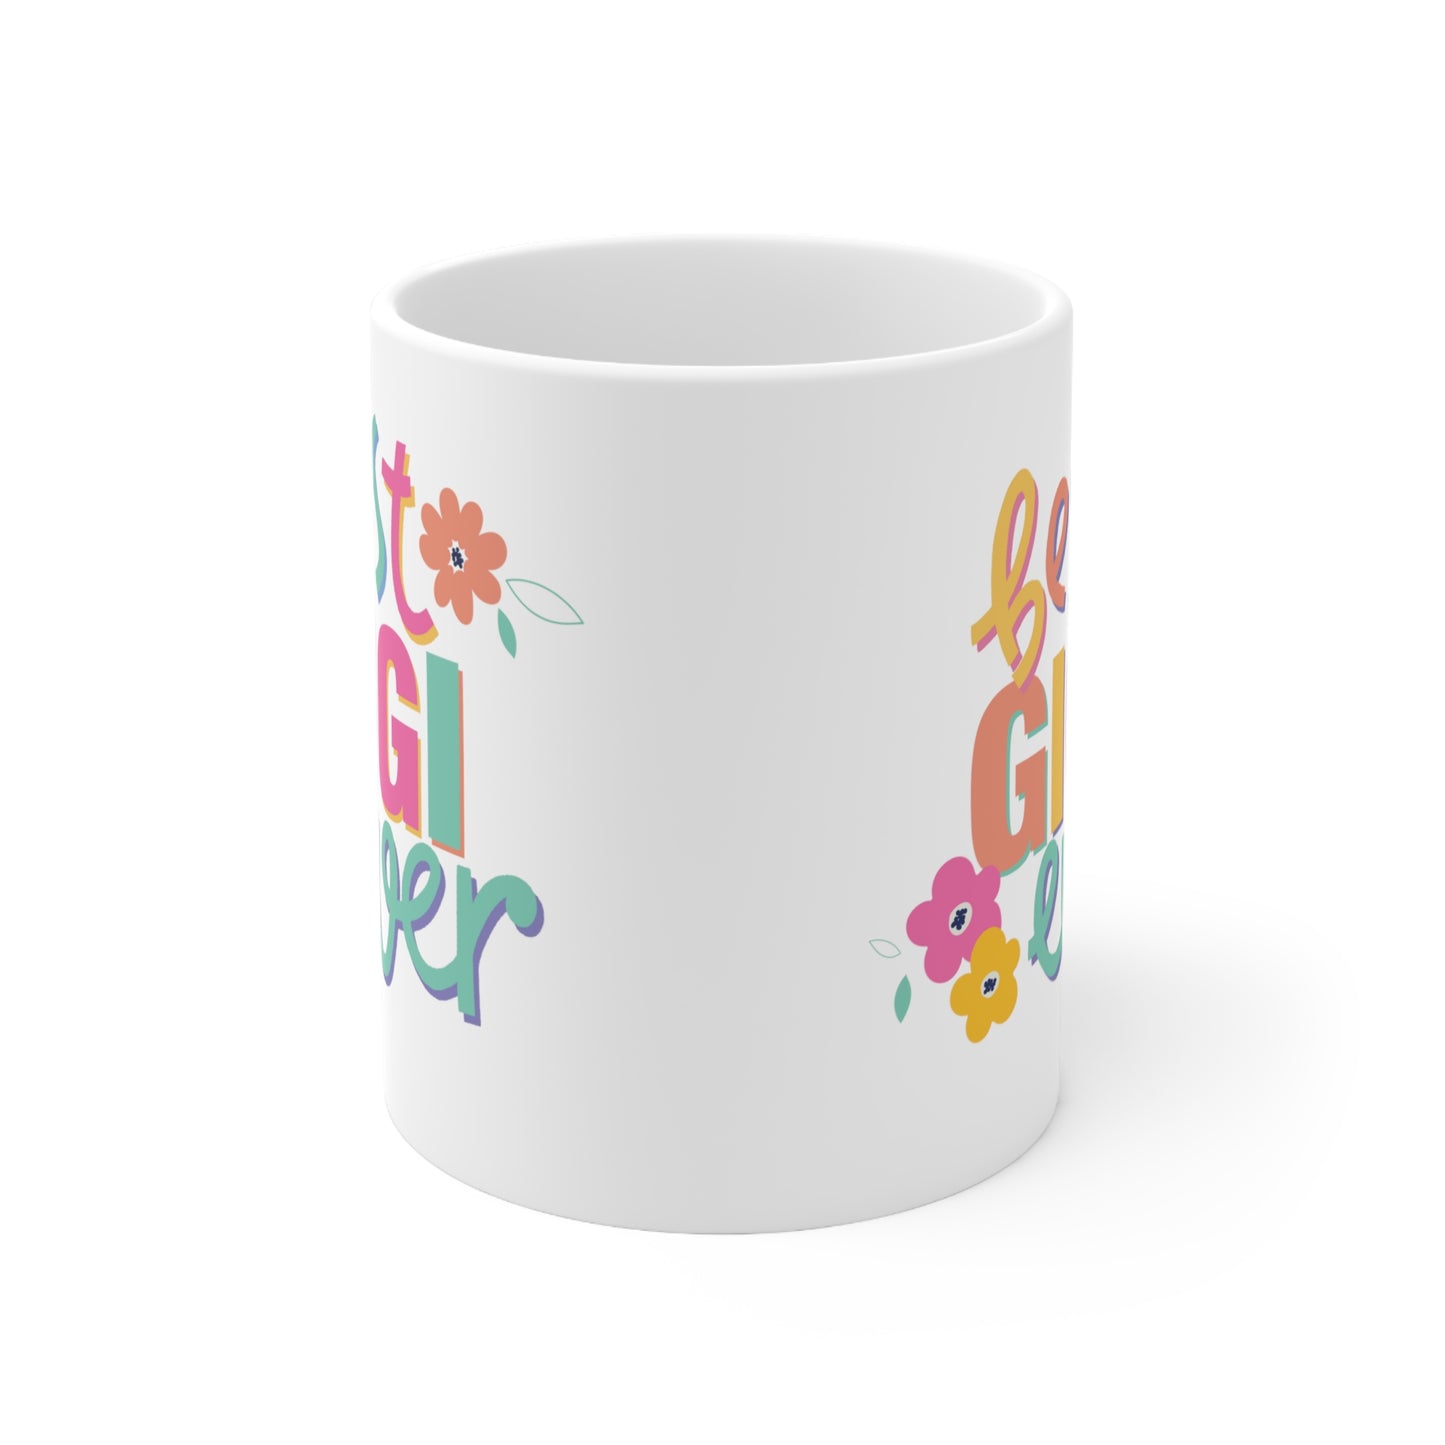 Best GiGi Ever 11oz Ceramic Mug, Mothers Day Gift